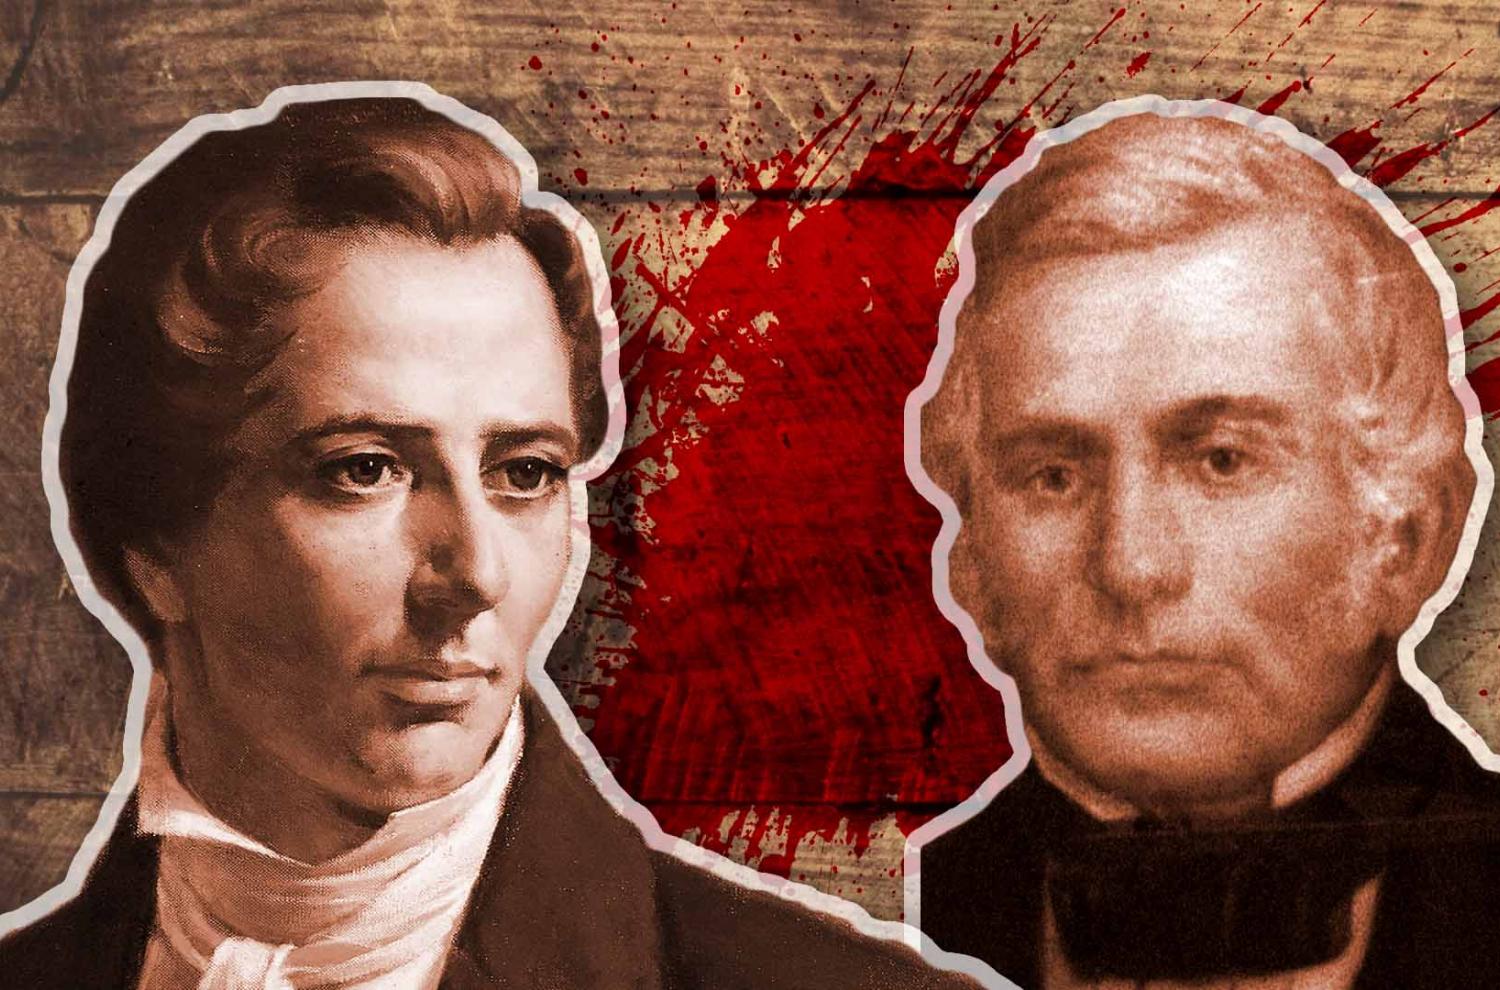 Portraits of Joseph Smith and Lilburn Boggs.